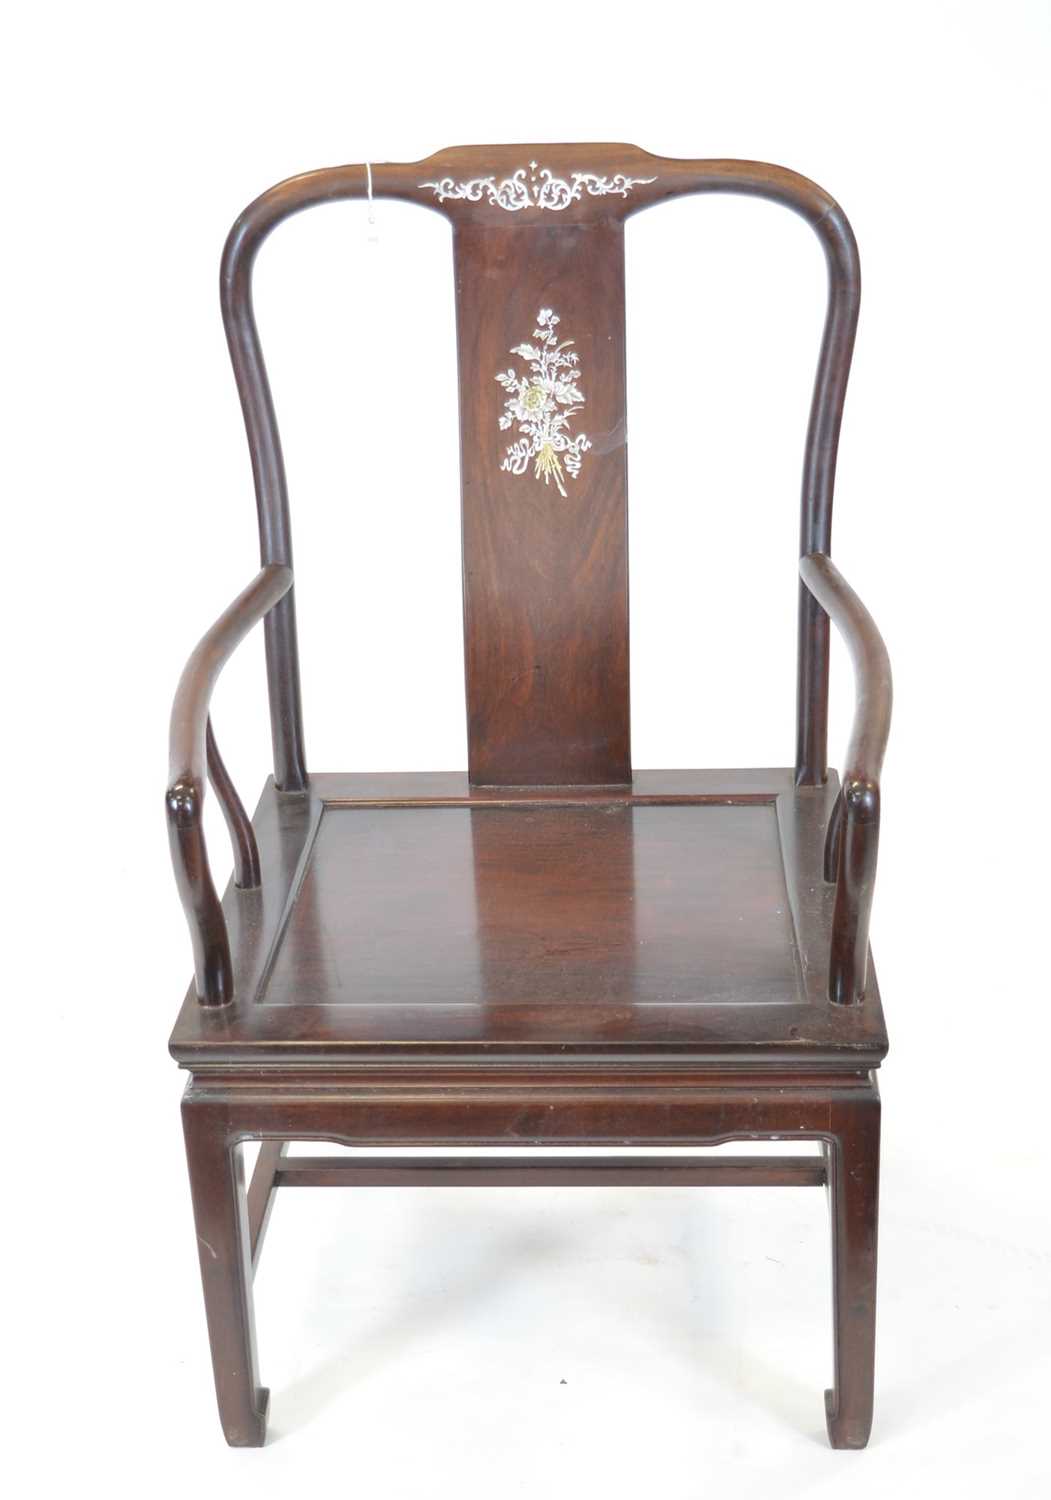 Lot 489 - Chinese hardwood chair